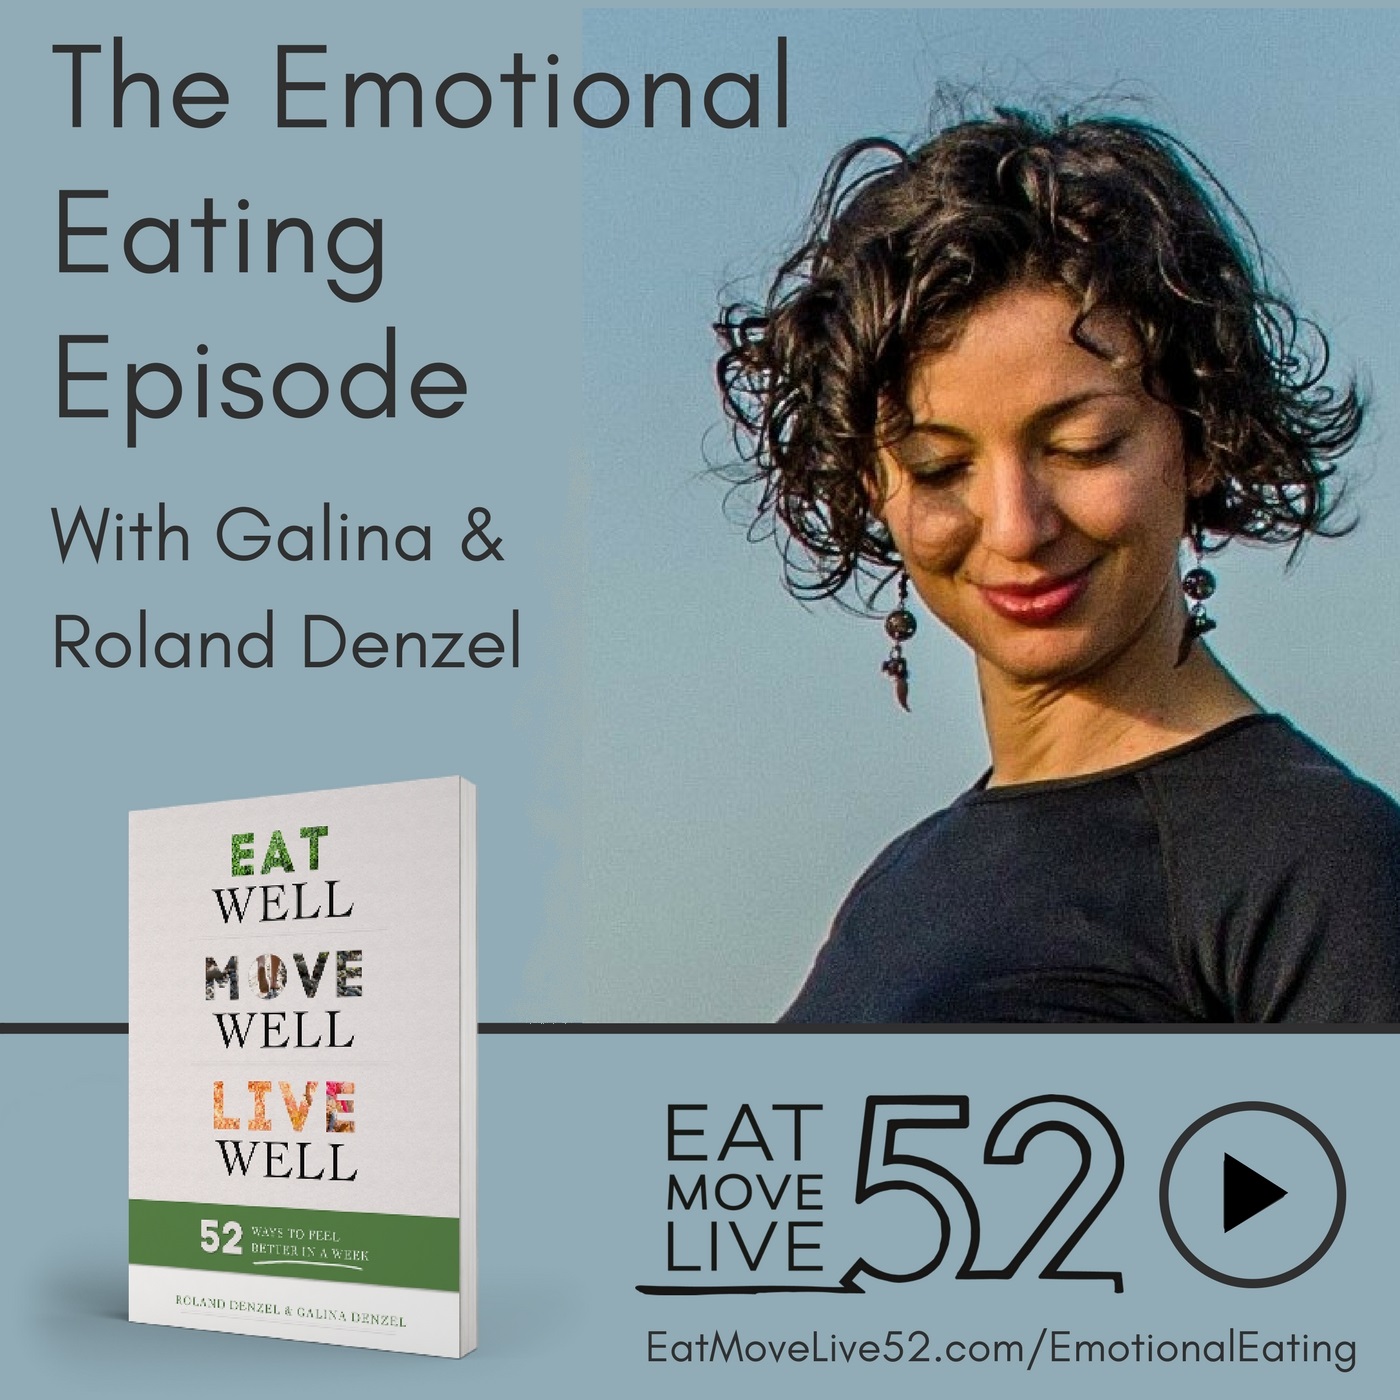 Stop Emotional Eating with Galina Denzel